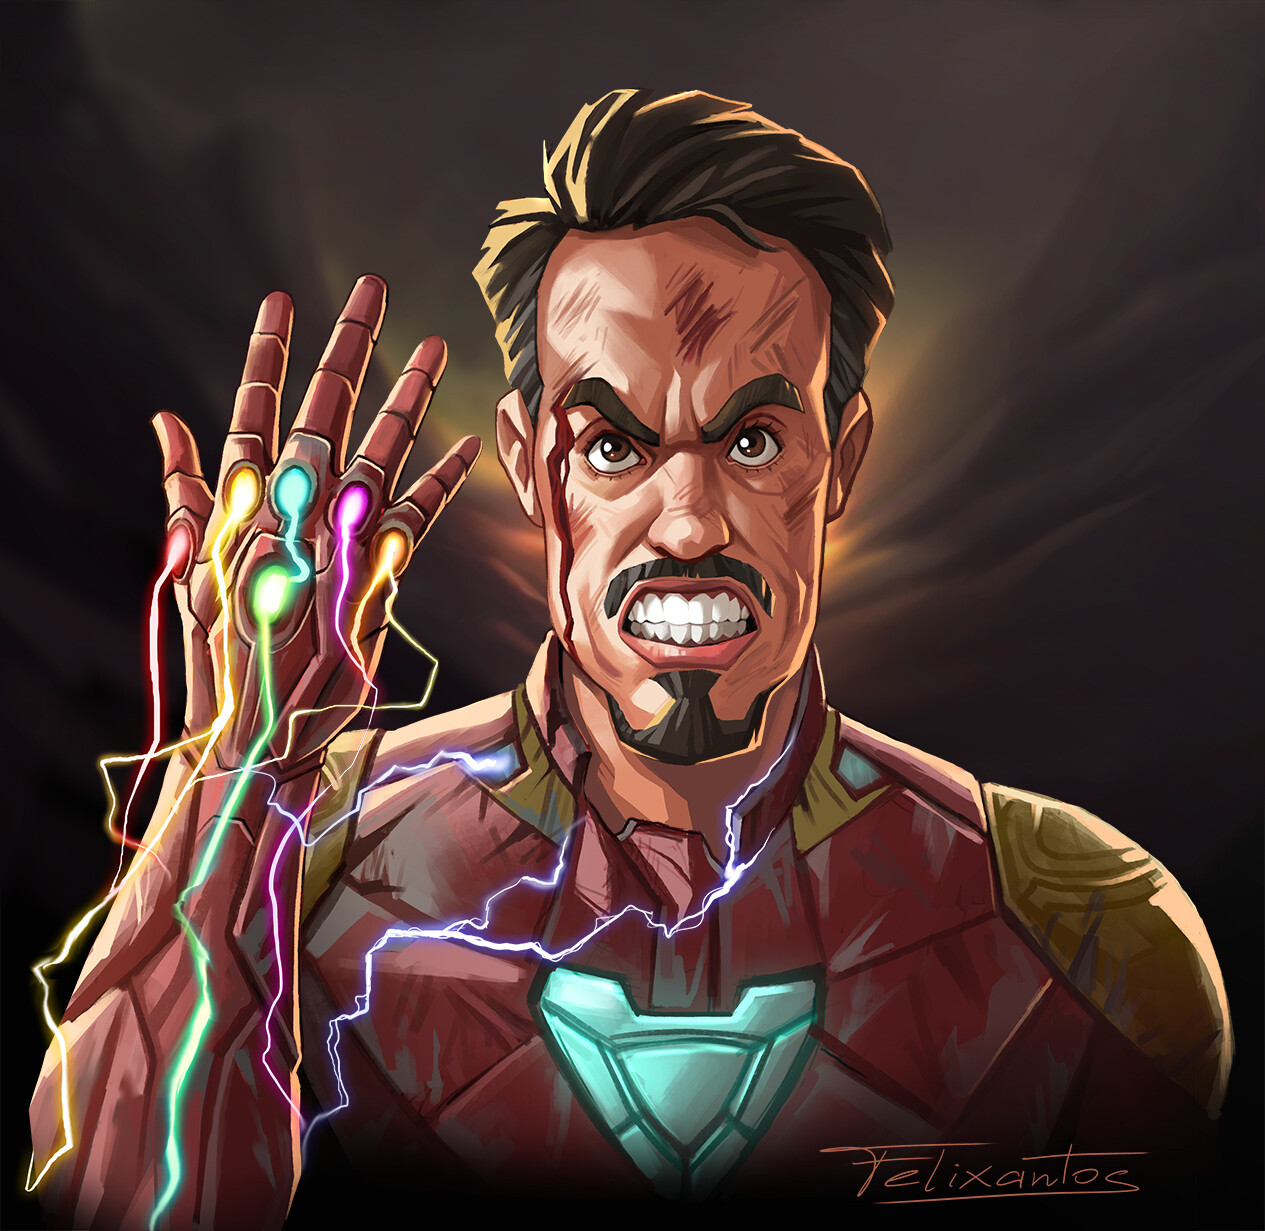 Felixantos ° - I am Iron Man